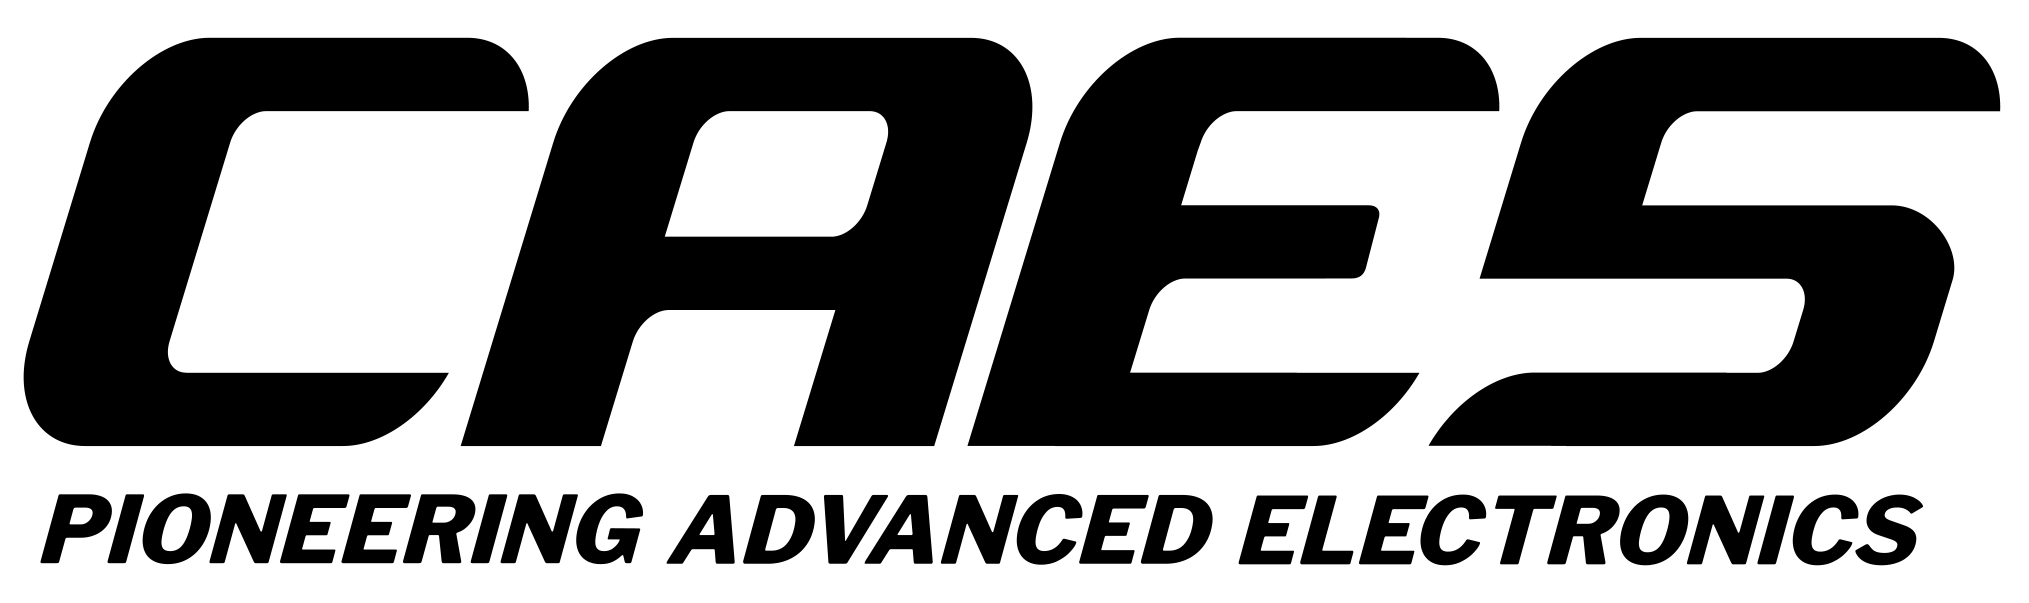 CAES logo